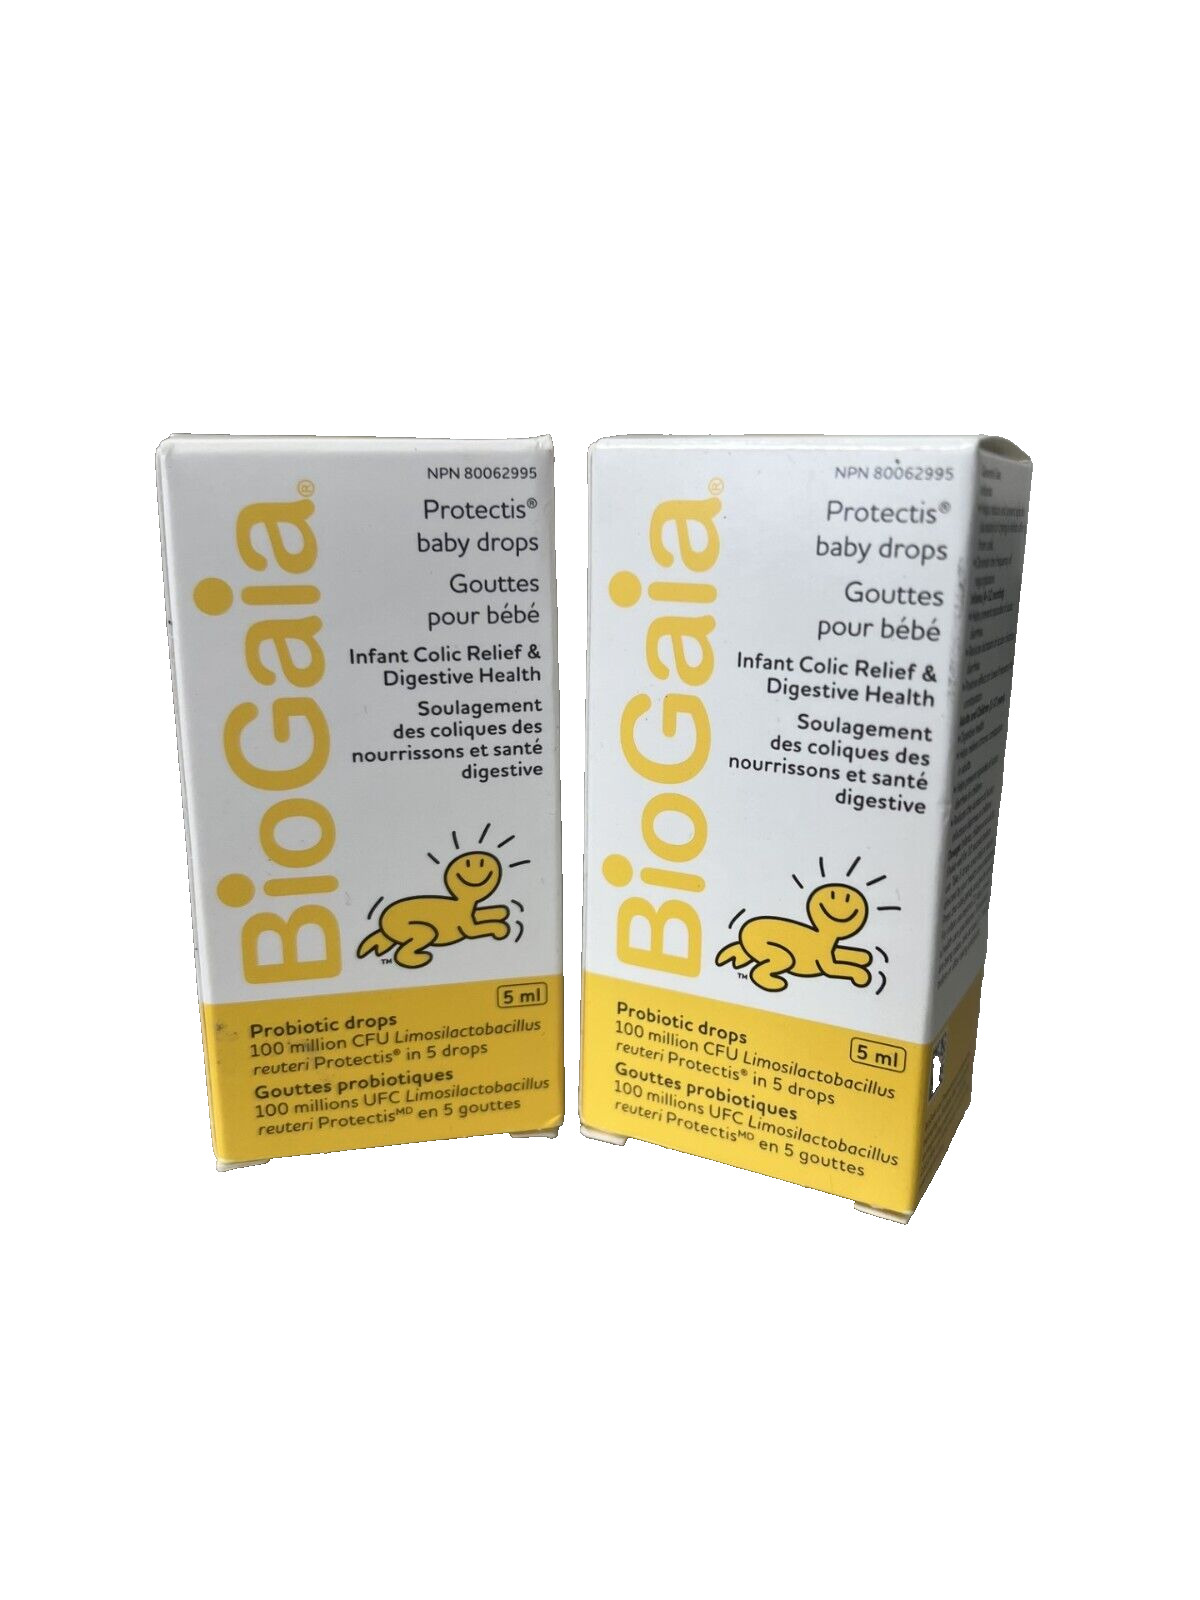 2 BioGaia Probiotics Drops With Vitamin D for Baby Infants Newborn & Kids 0.5 ml